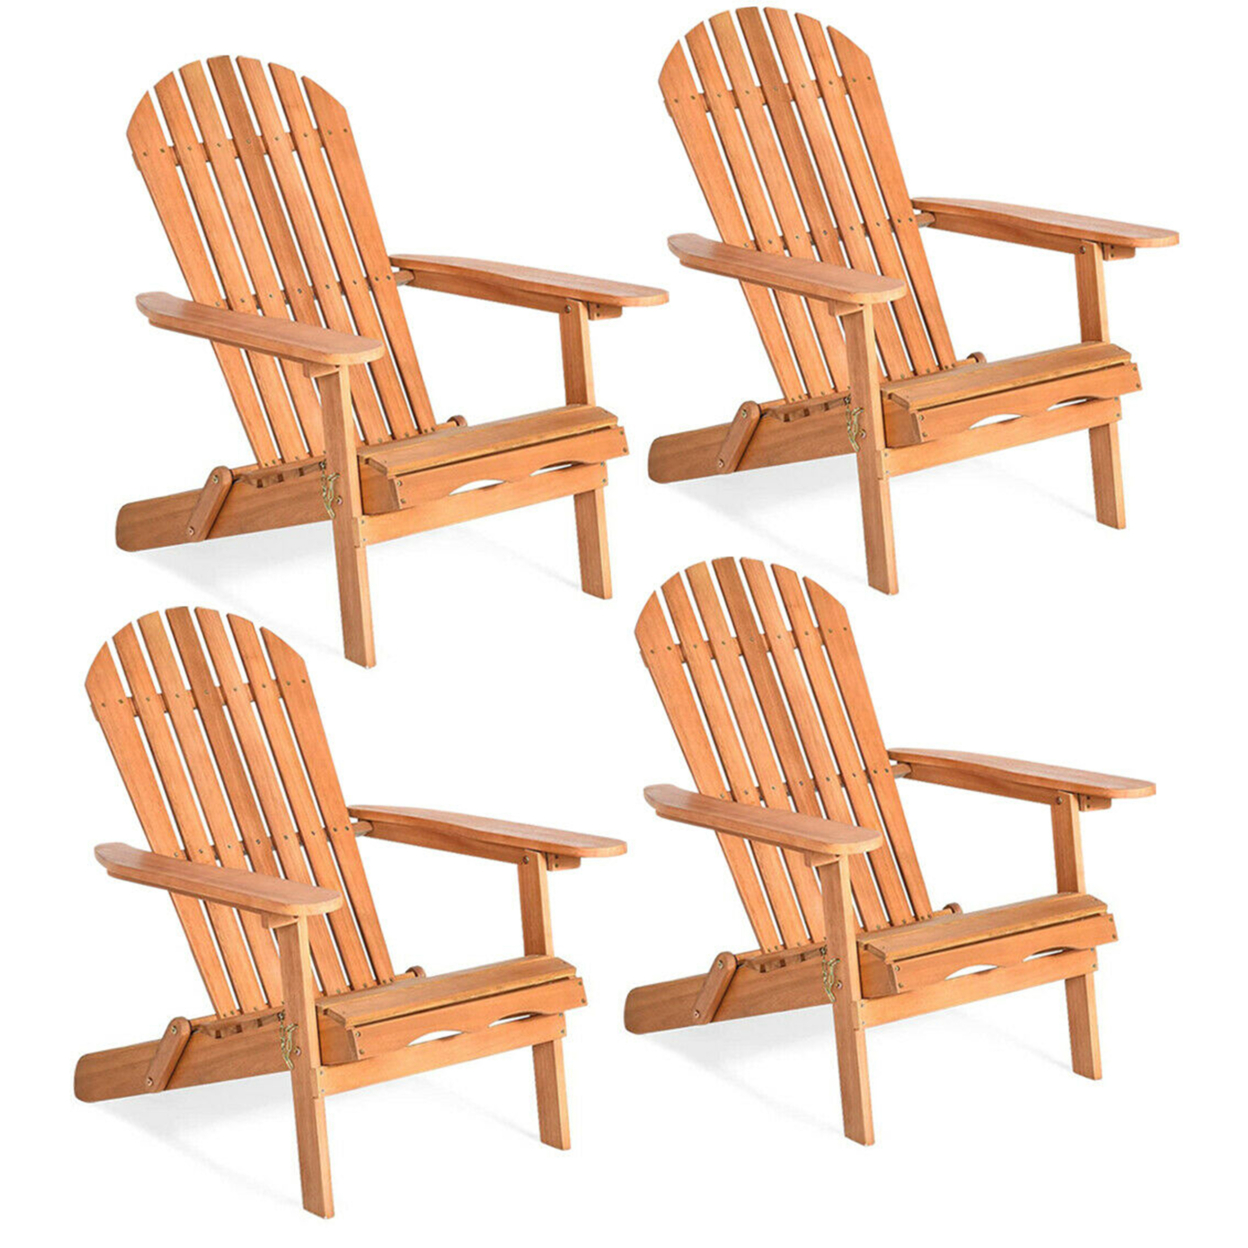 4 PCS Eucalyptus Adirondack Chair Foldable Outdoor Wood Lounger Chair Natural